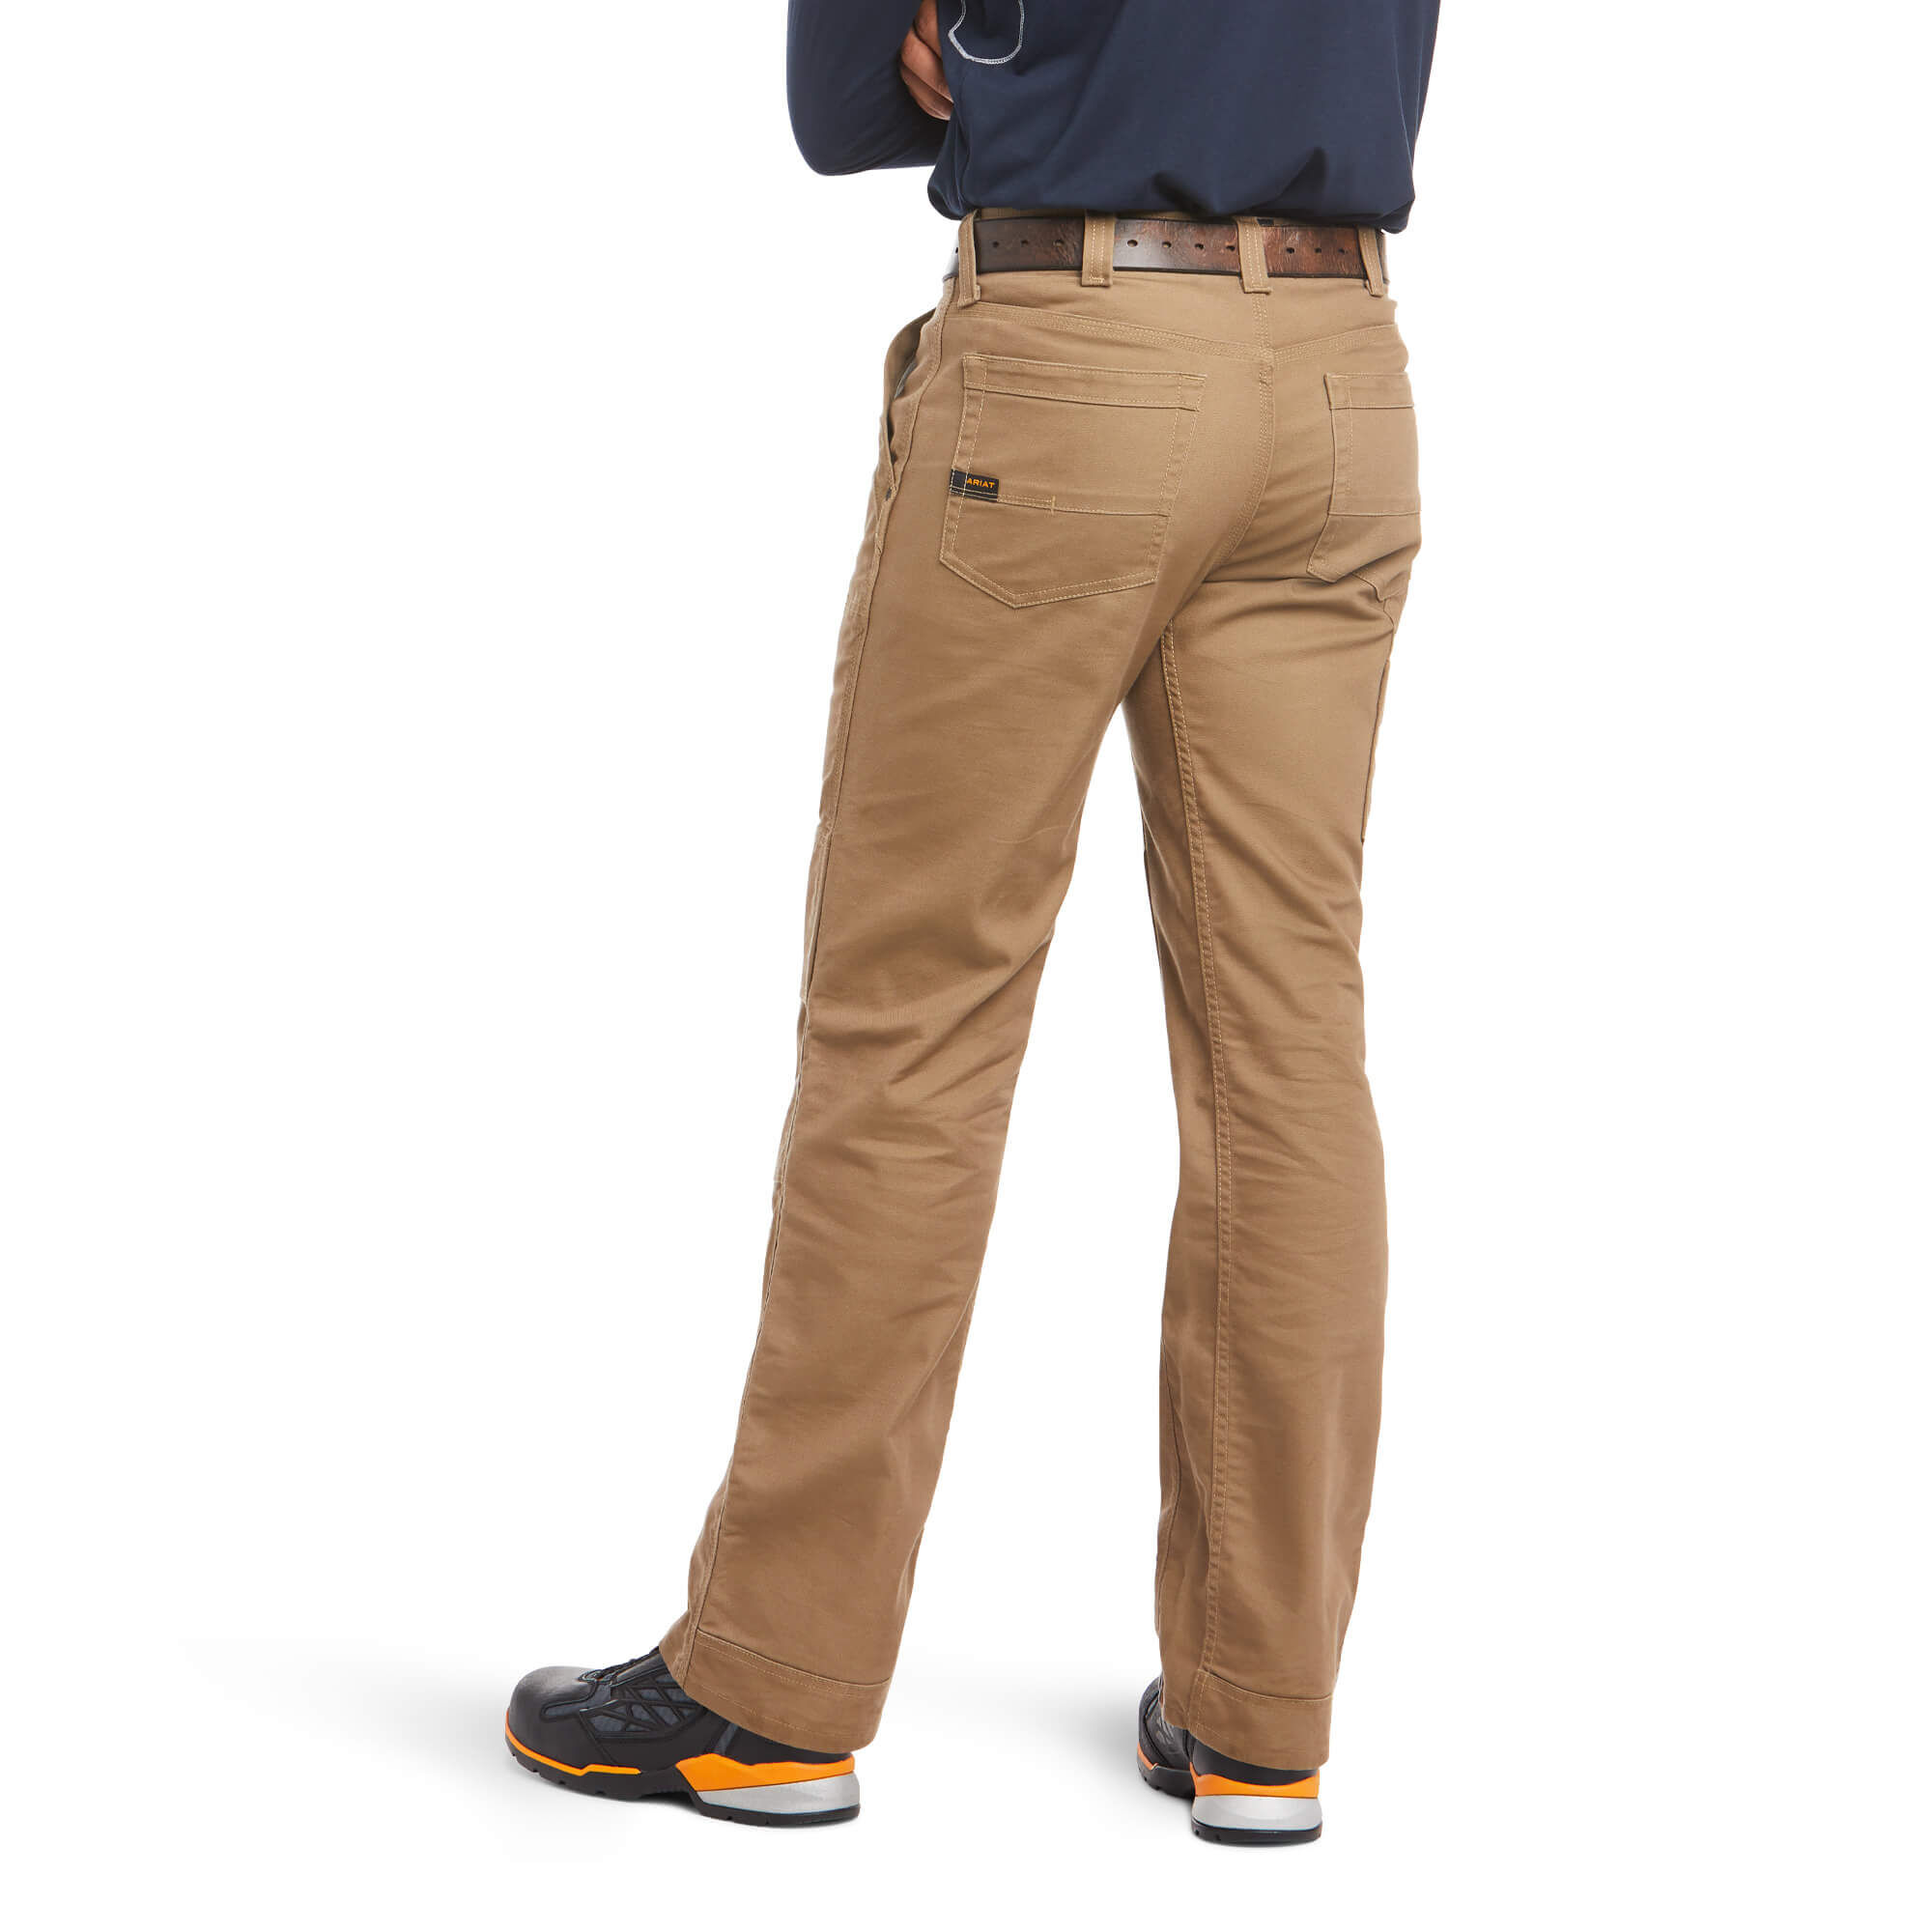 Gap Khakis Pants Mens Beige Loose Fit Bootcut Flat Front Mid Rise Size  32x30  eBay